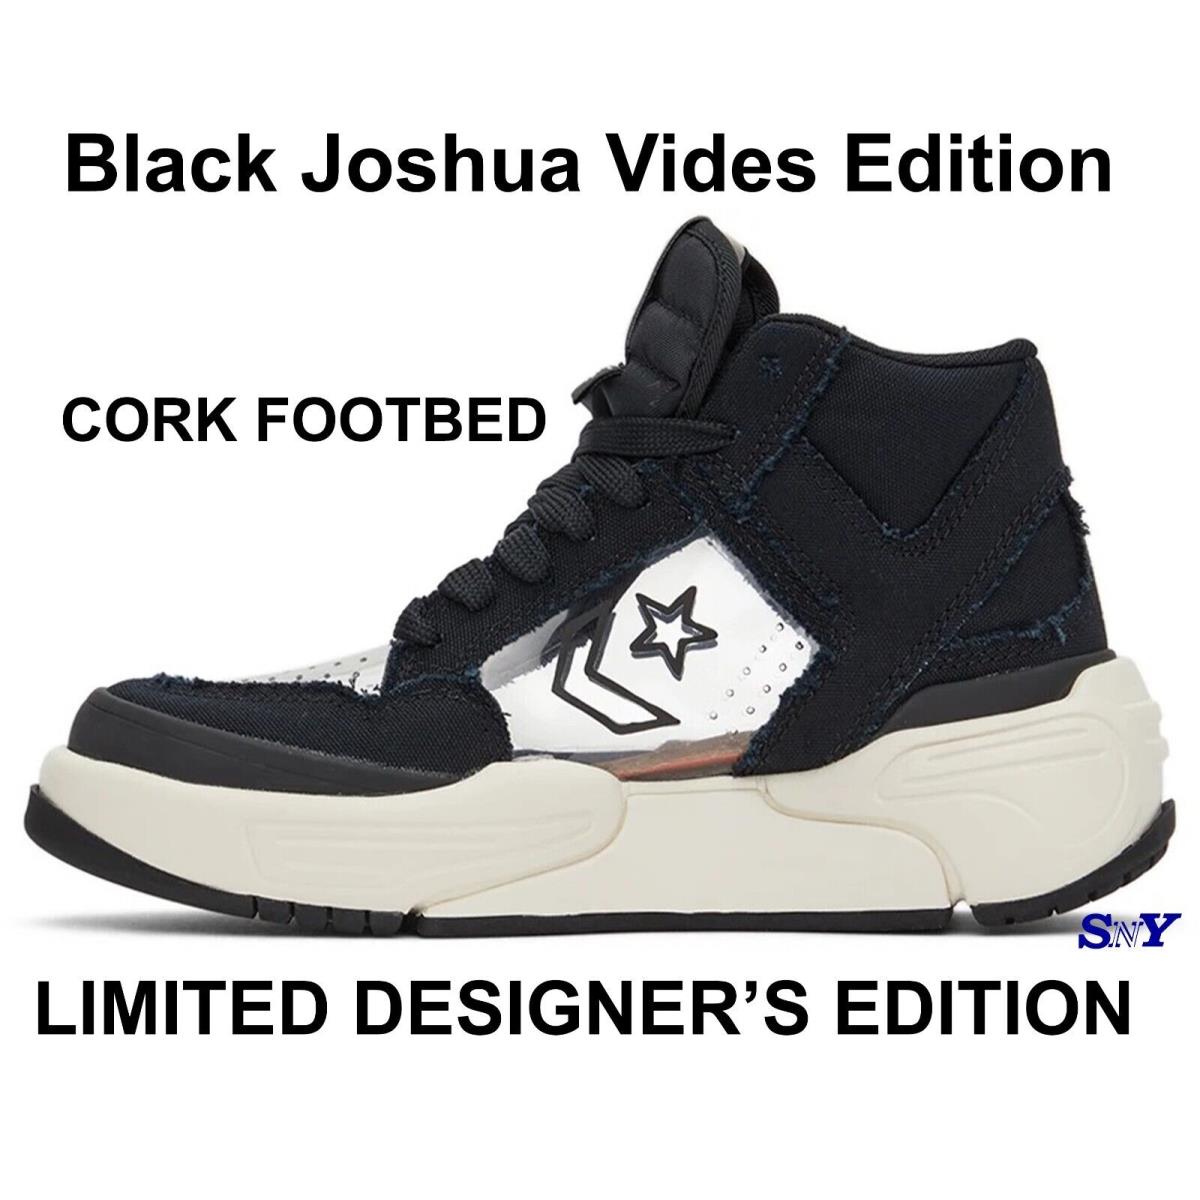 Converse Black Joshua Vides Edition Weapon CX High Top Men`s Sneaker Lightweight - Black